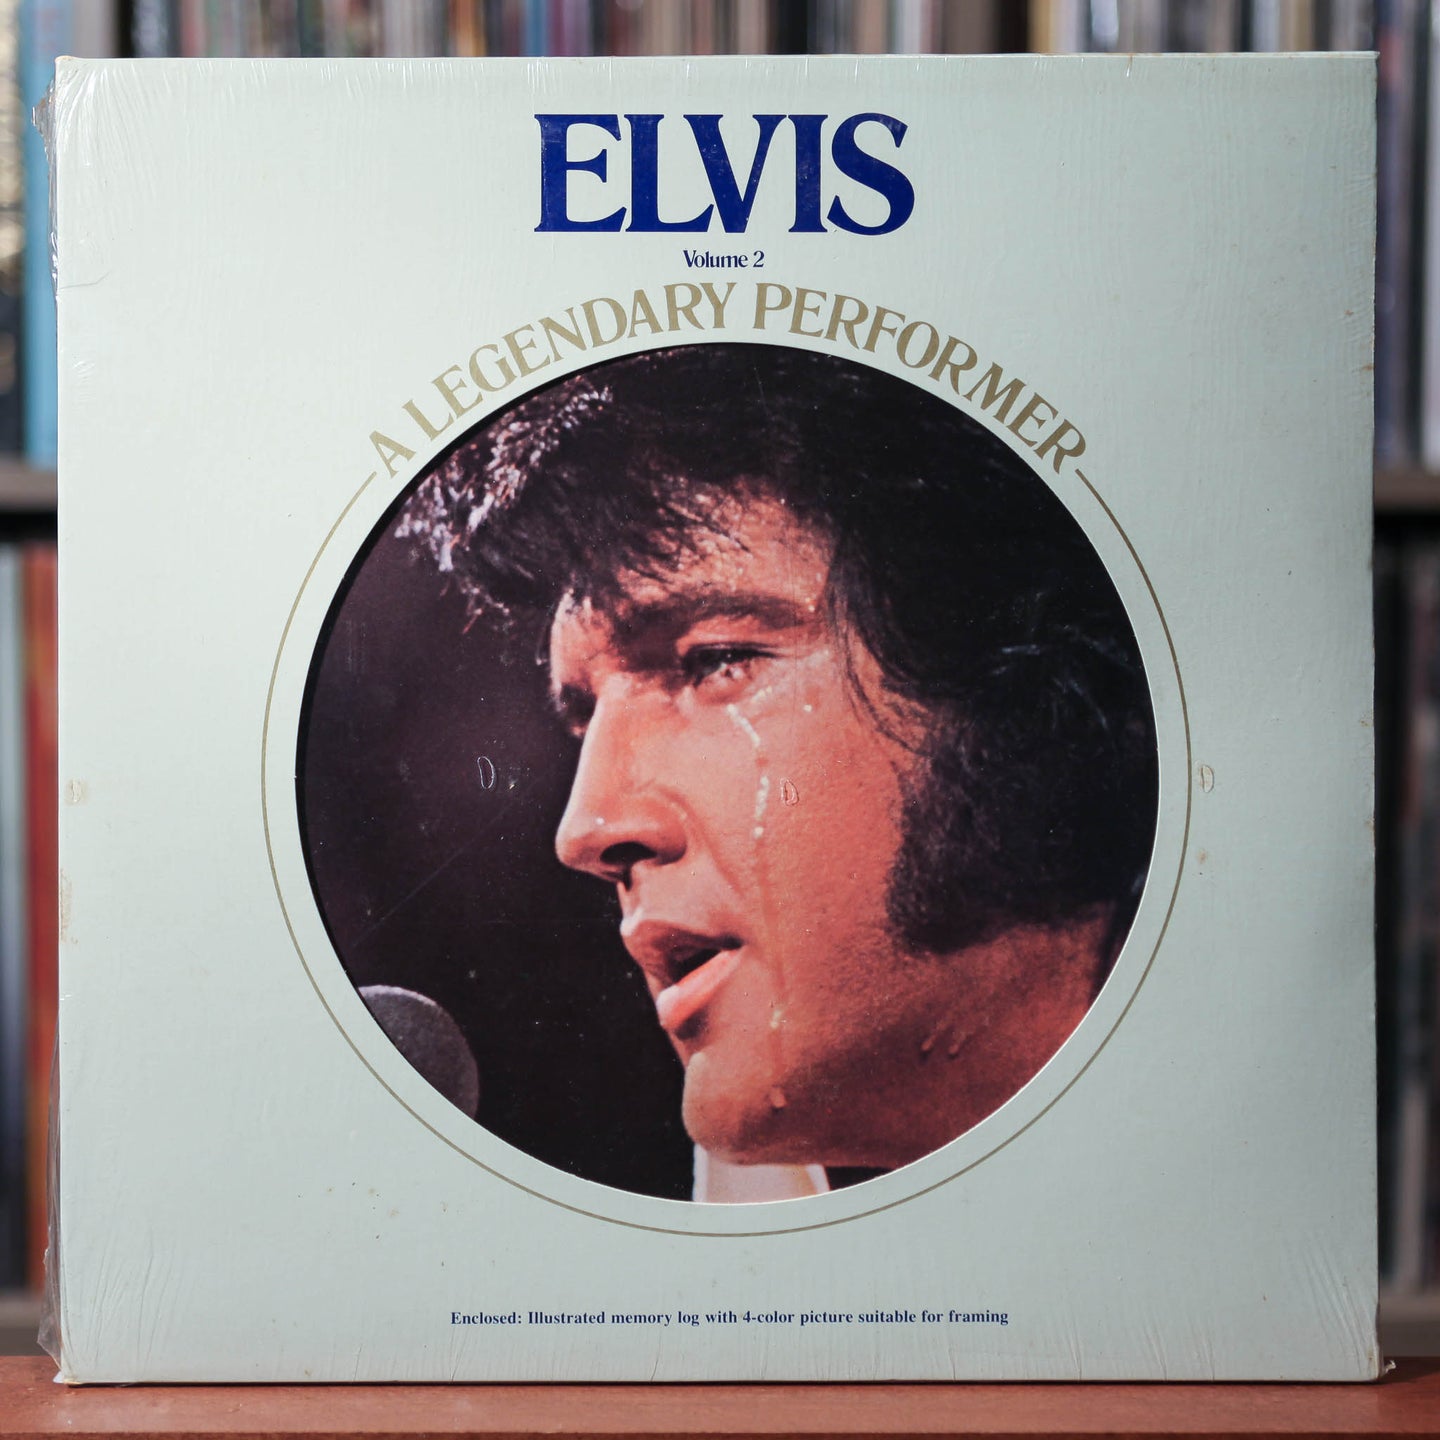 Elvis Presley - A Legendary Performer - Volume 2 - 1976 RCA, SEALED